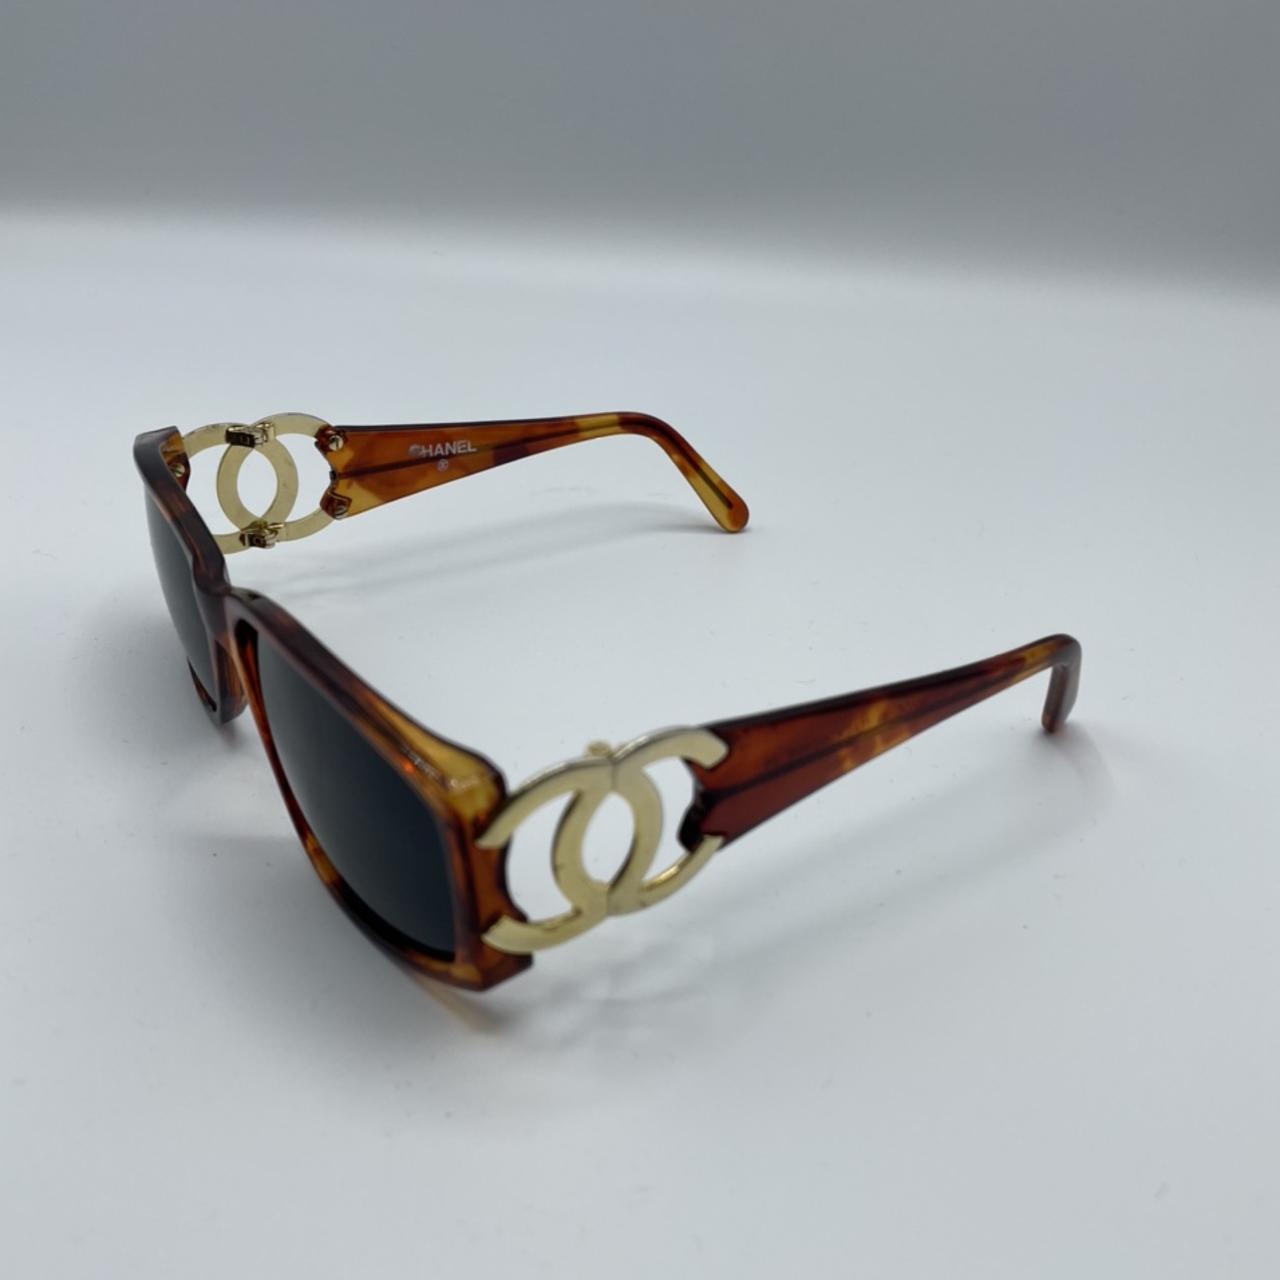 Vintage Chanel Sunglasses #Vintage #Chanel